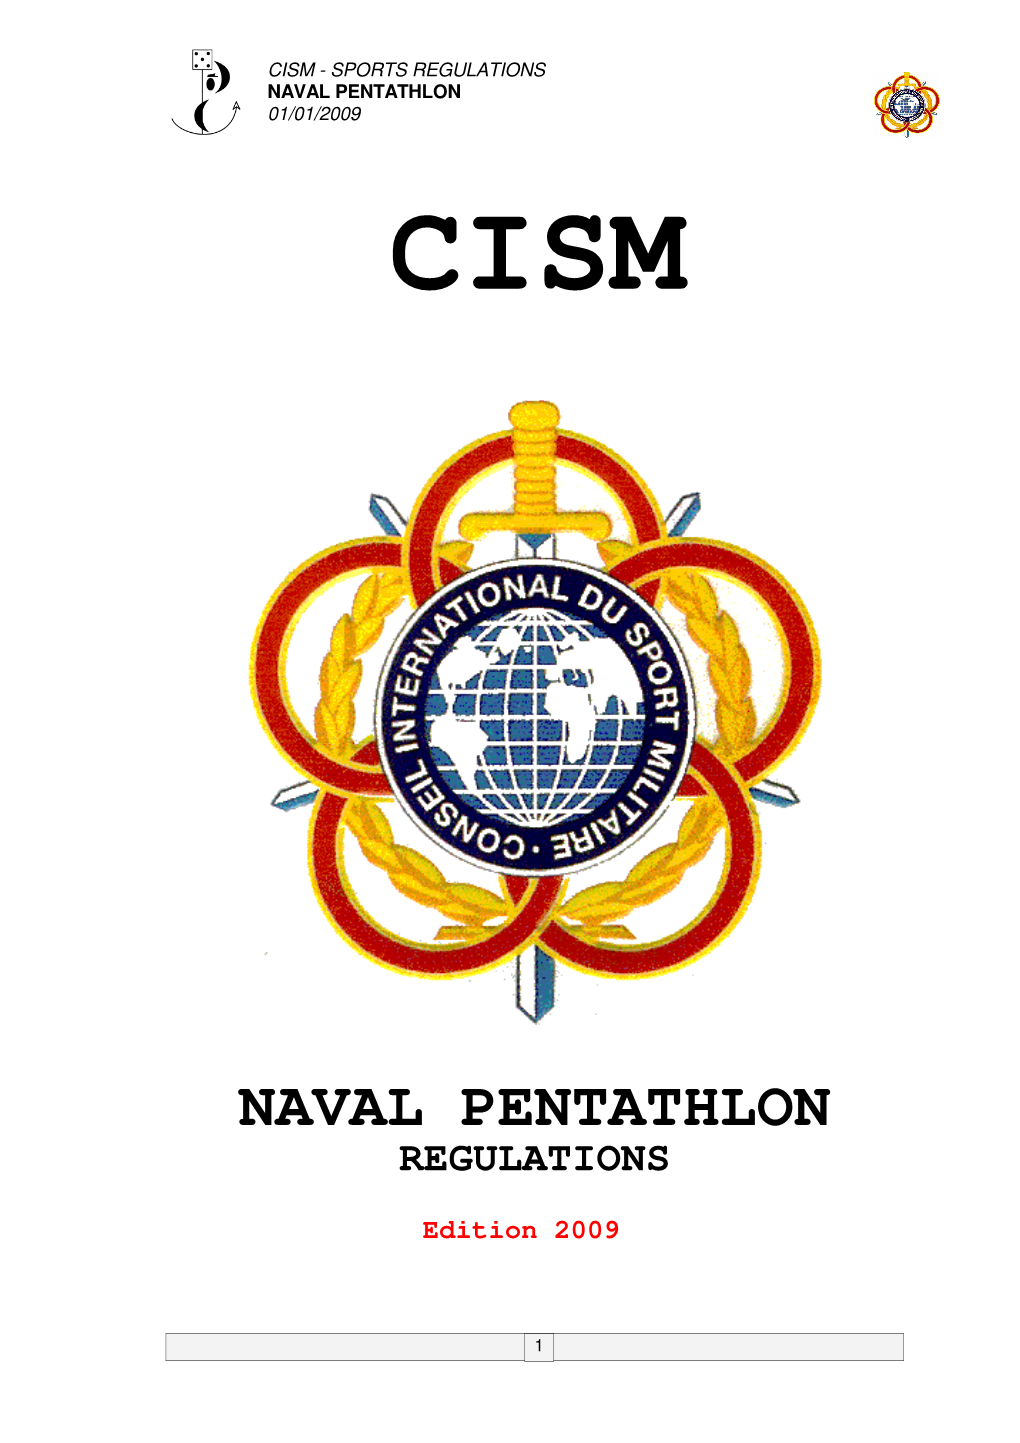 Naval Pentathlon 01/01/2009